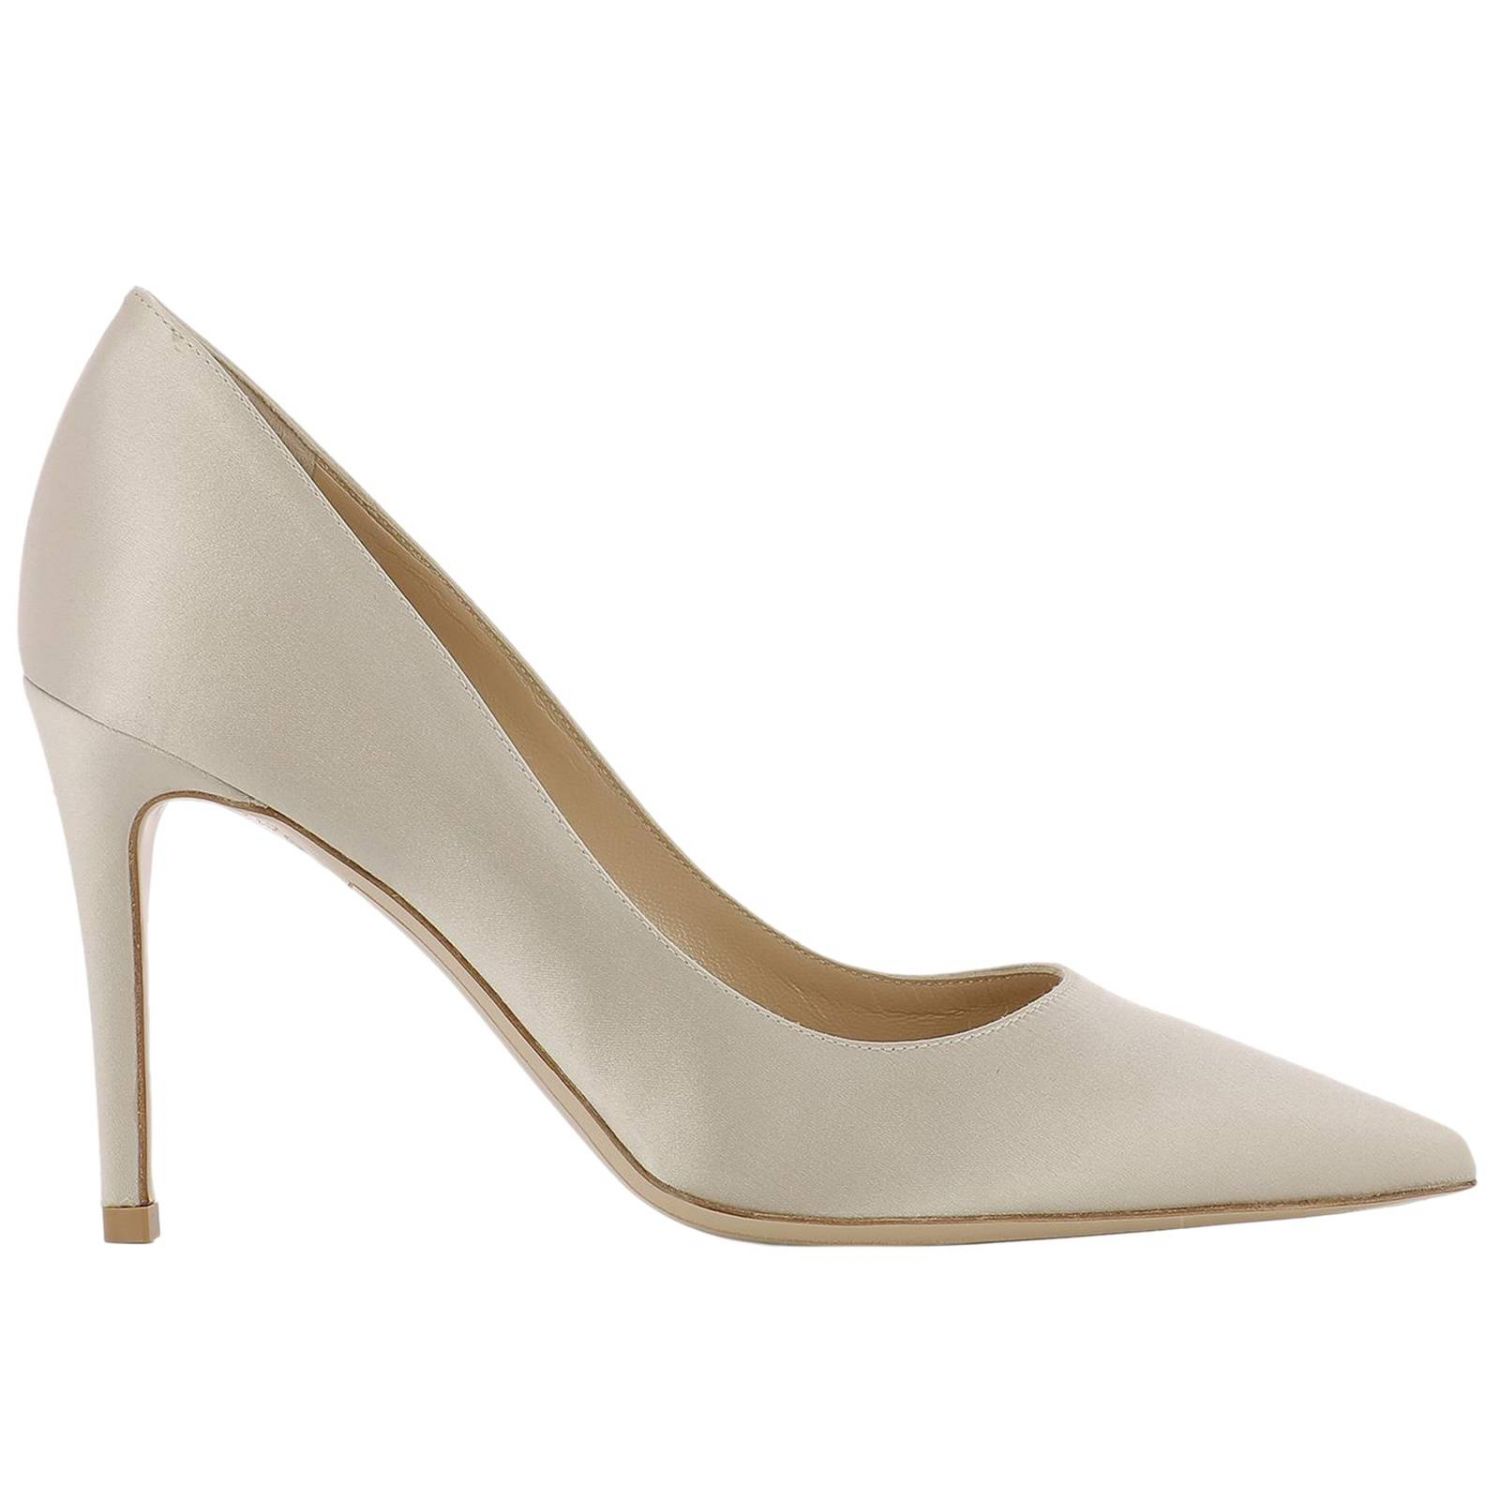 DEIMILLE: High heel shoes women - White | High Heel Shoes Deimille ...